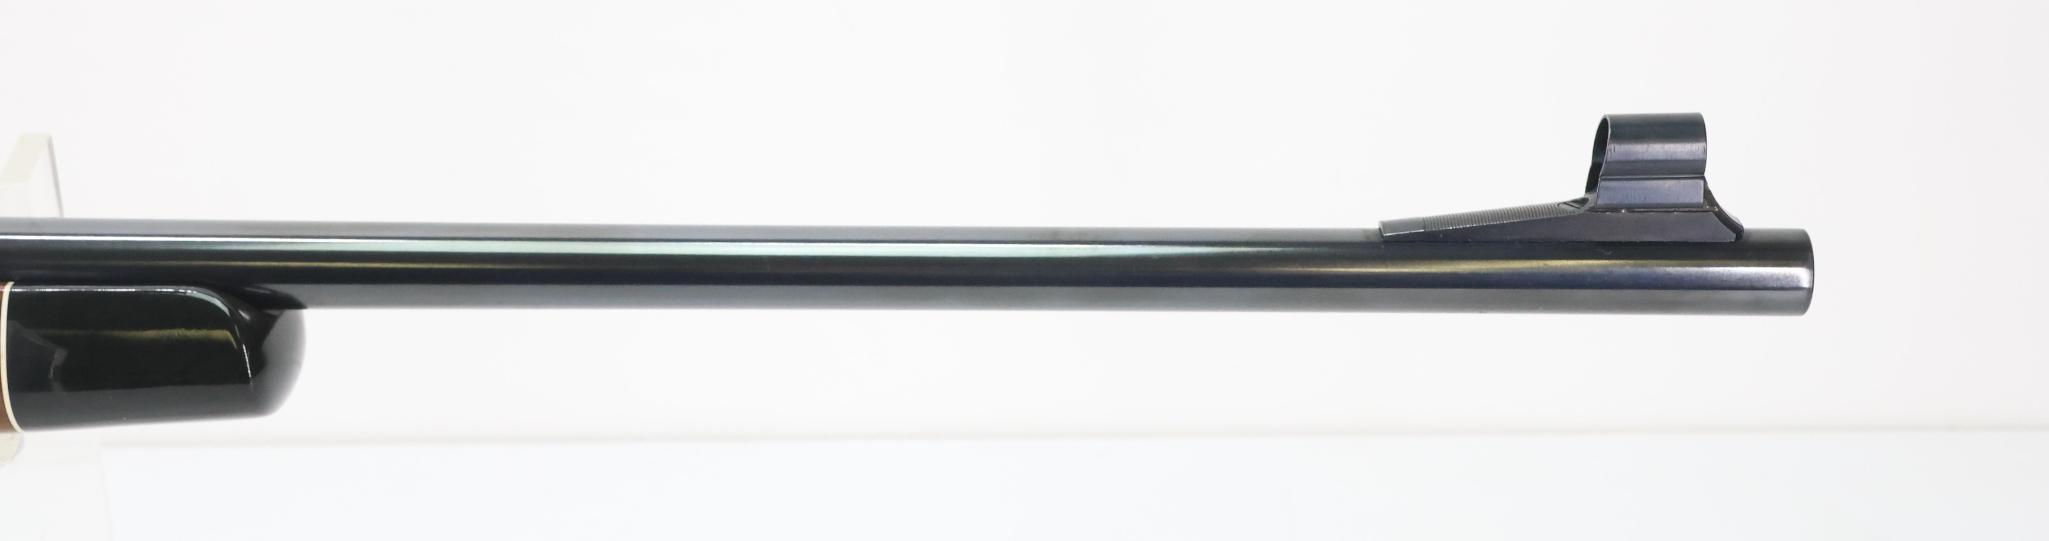 Engraved Remington 700 BDL DBM Bolt Action Rifle